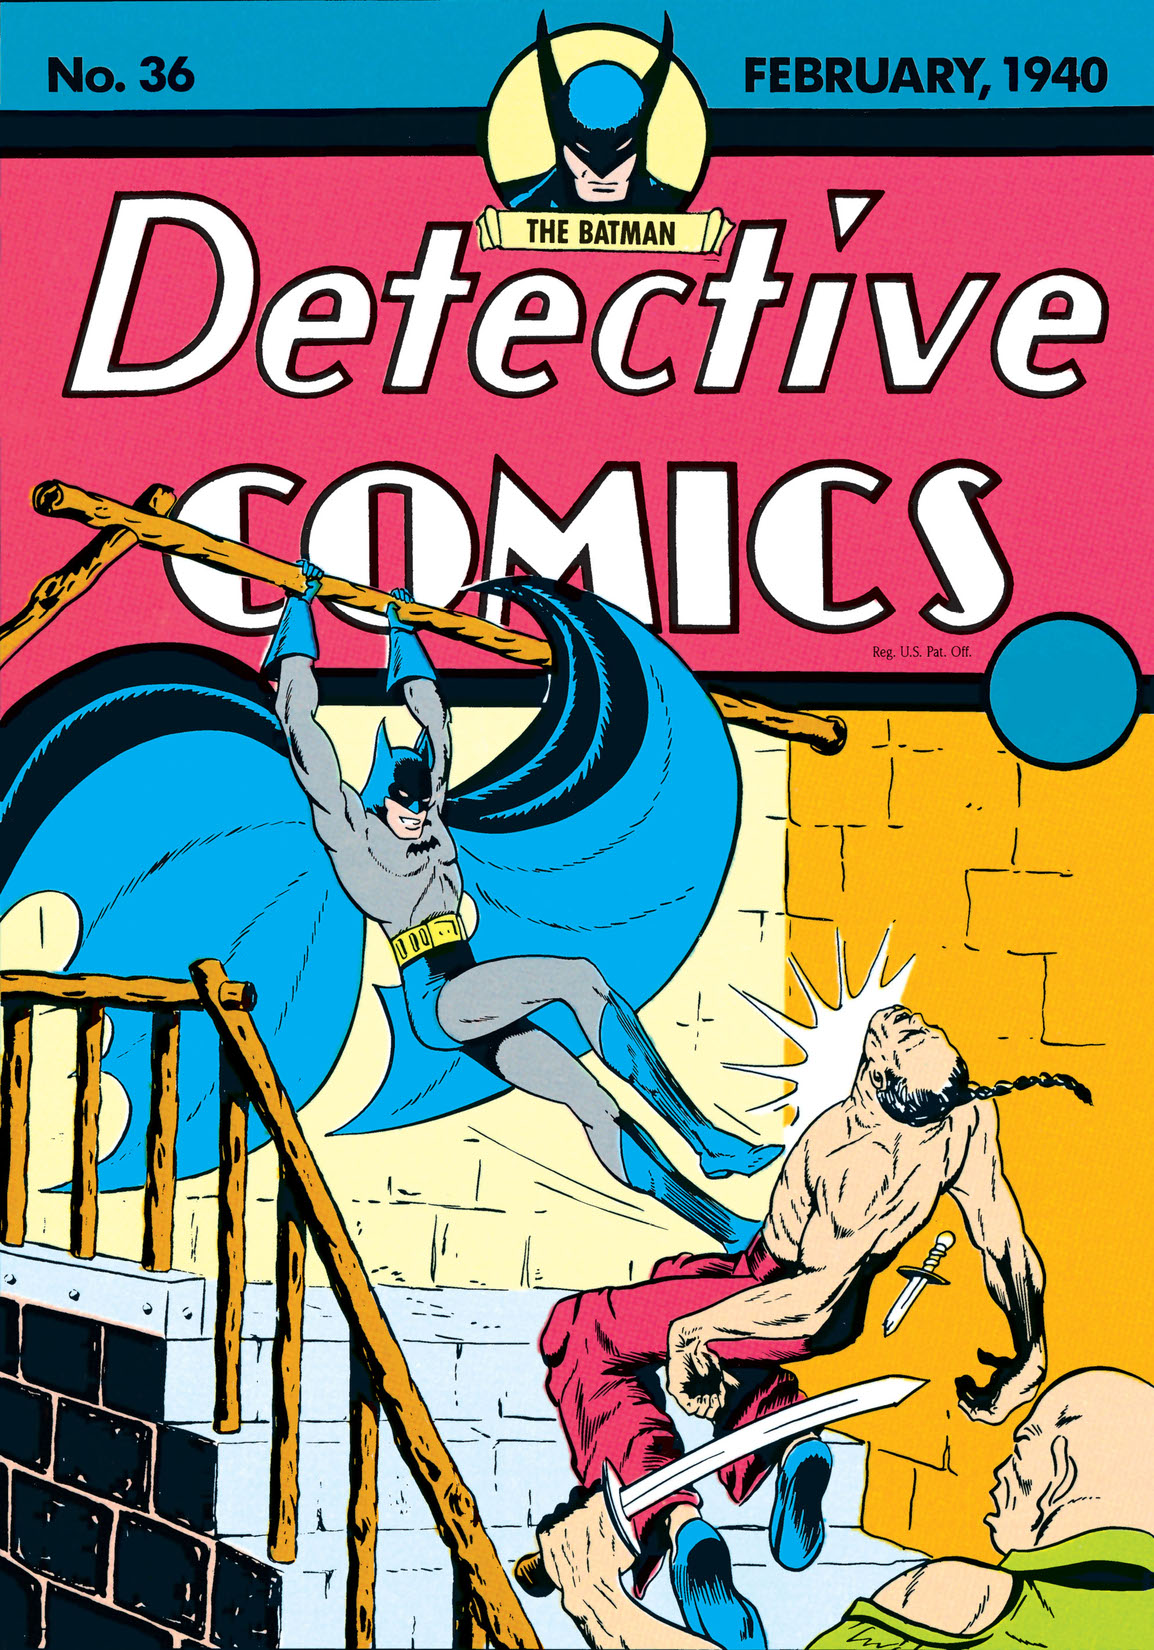 Detective Comics (1937-) #36 preview images